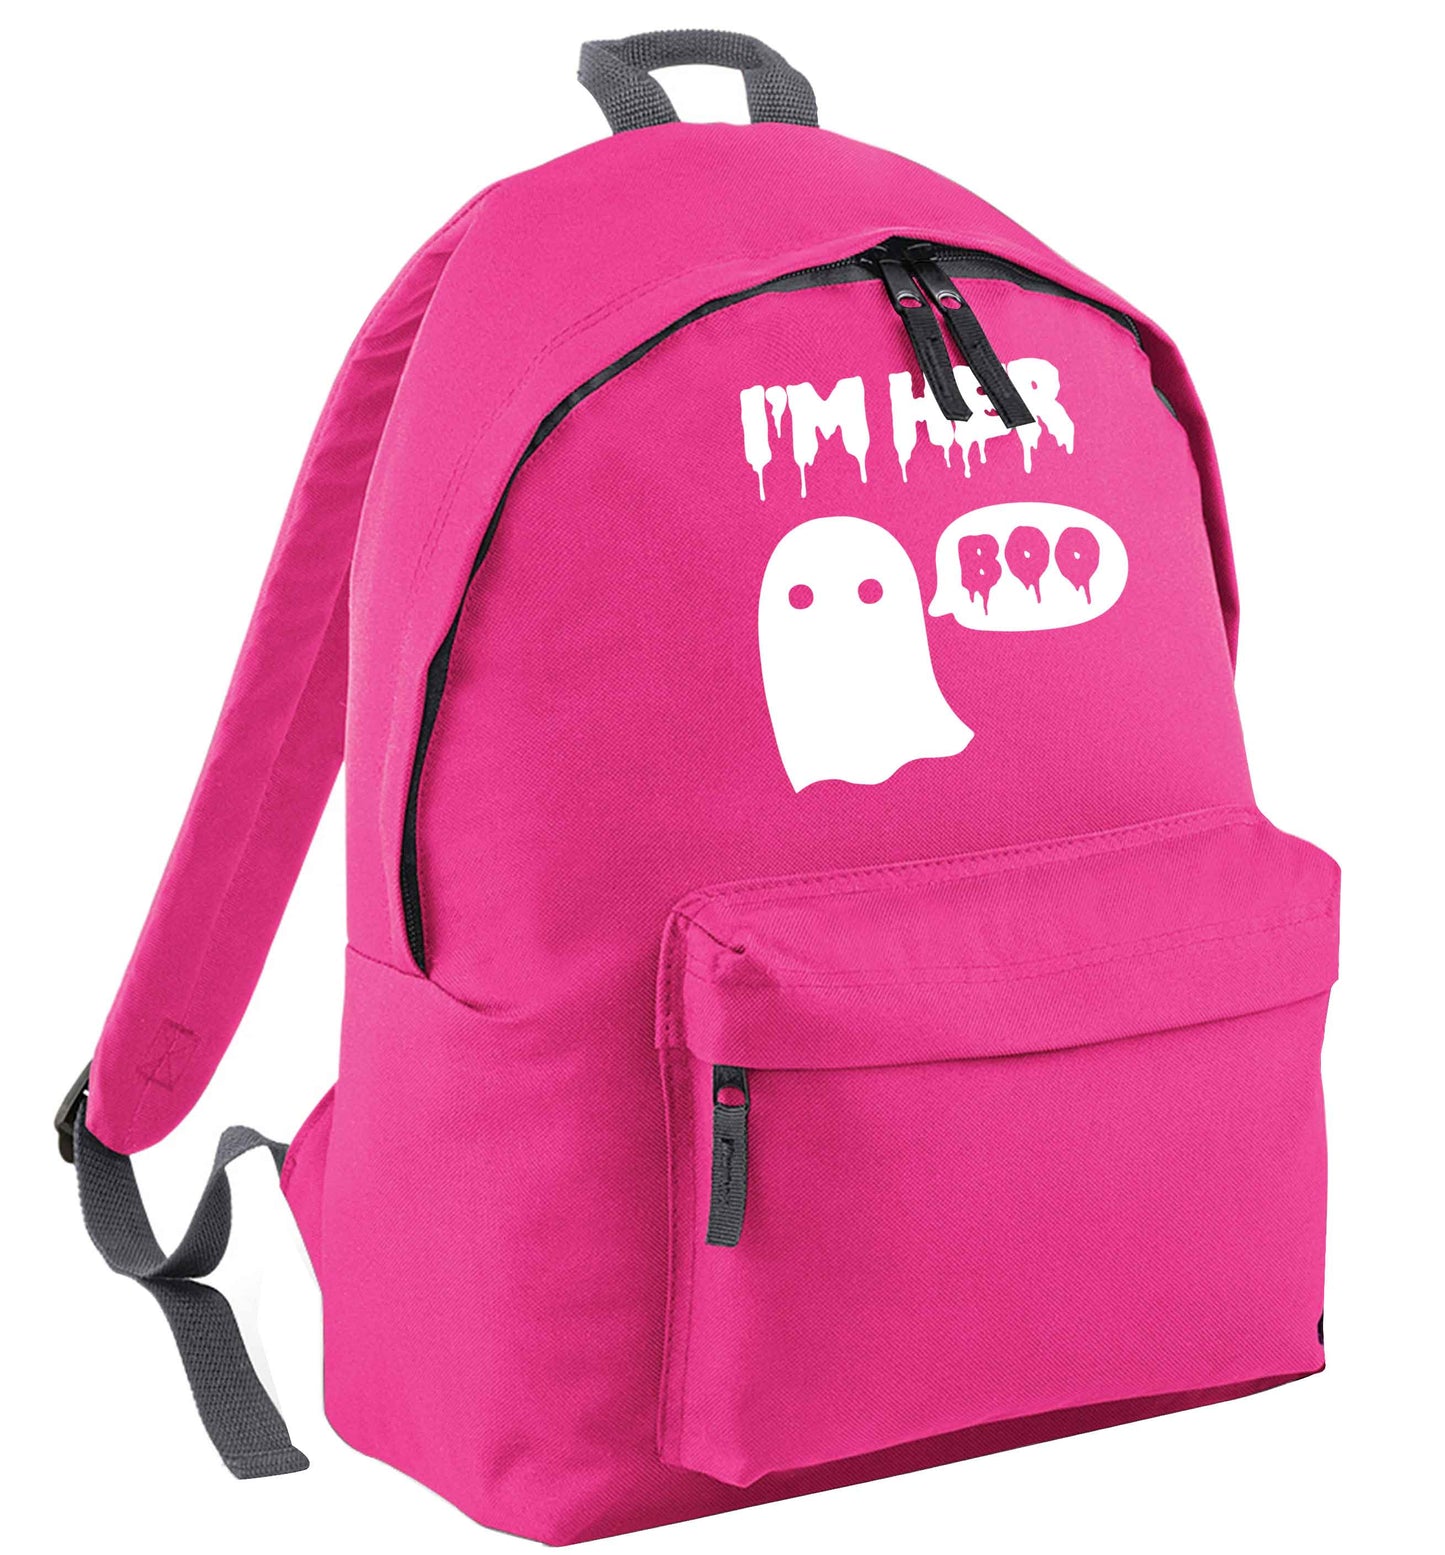 I'm her boo pink adults backpack